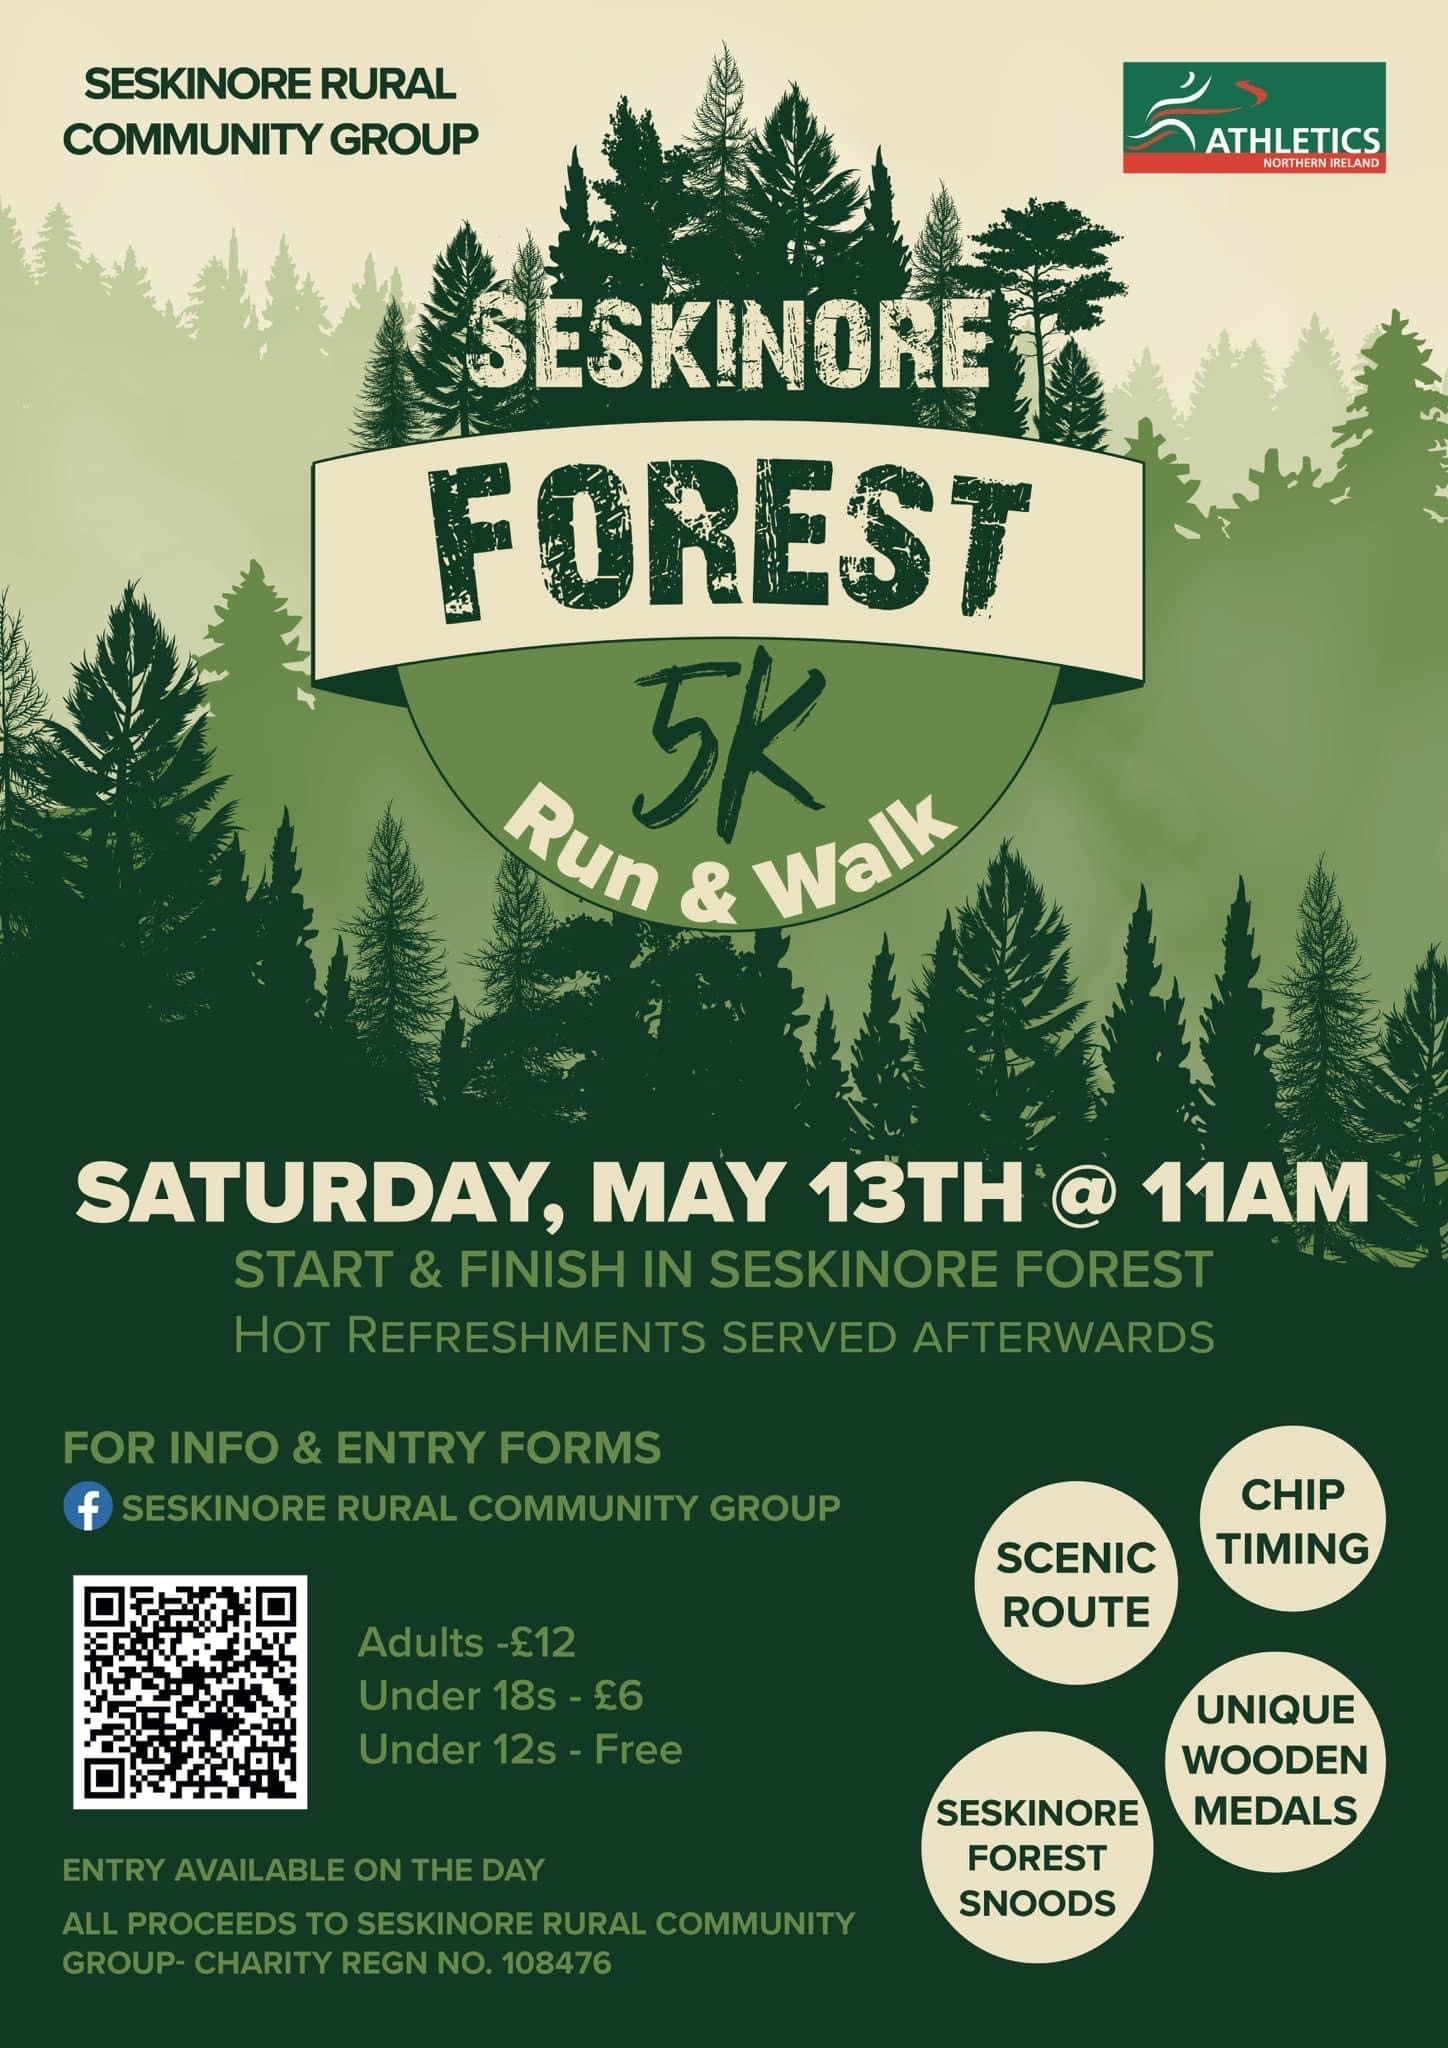 Seskinore Forest 5k Run and Walk